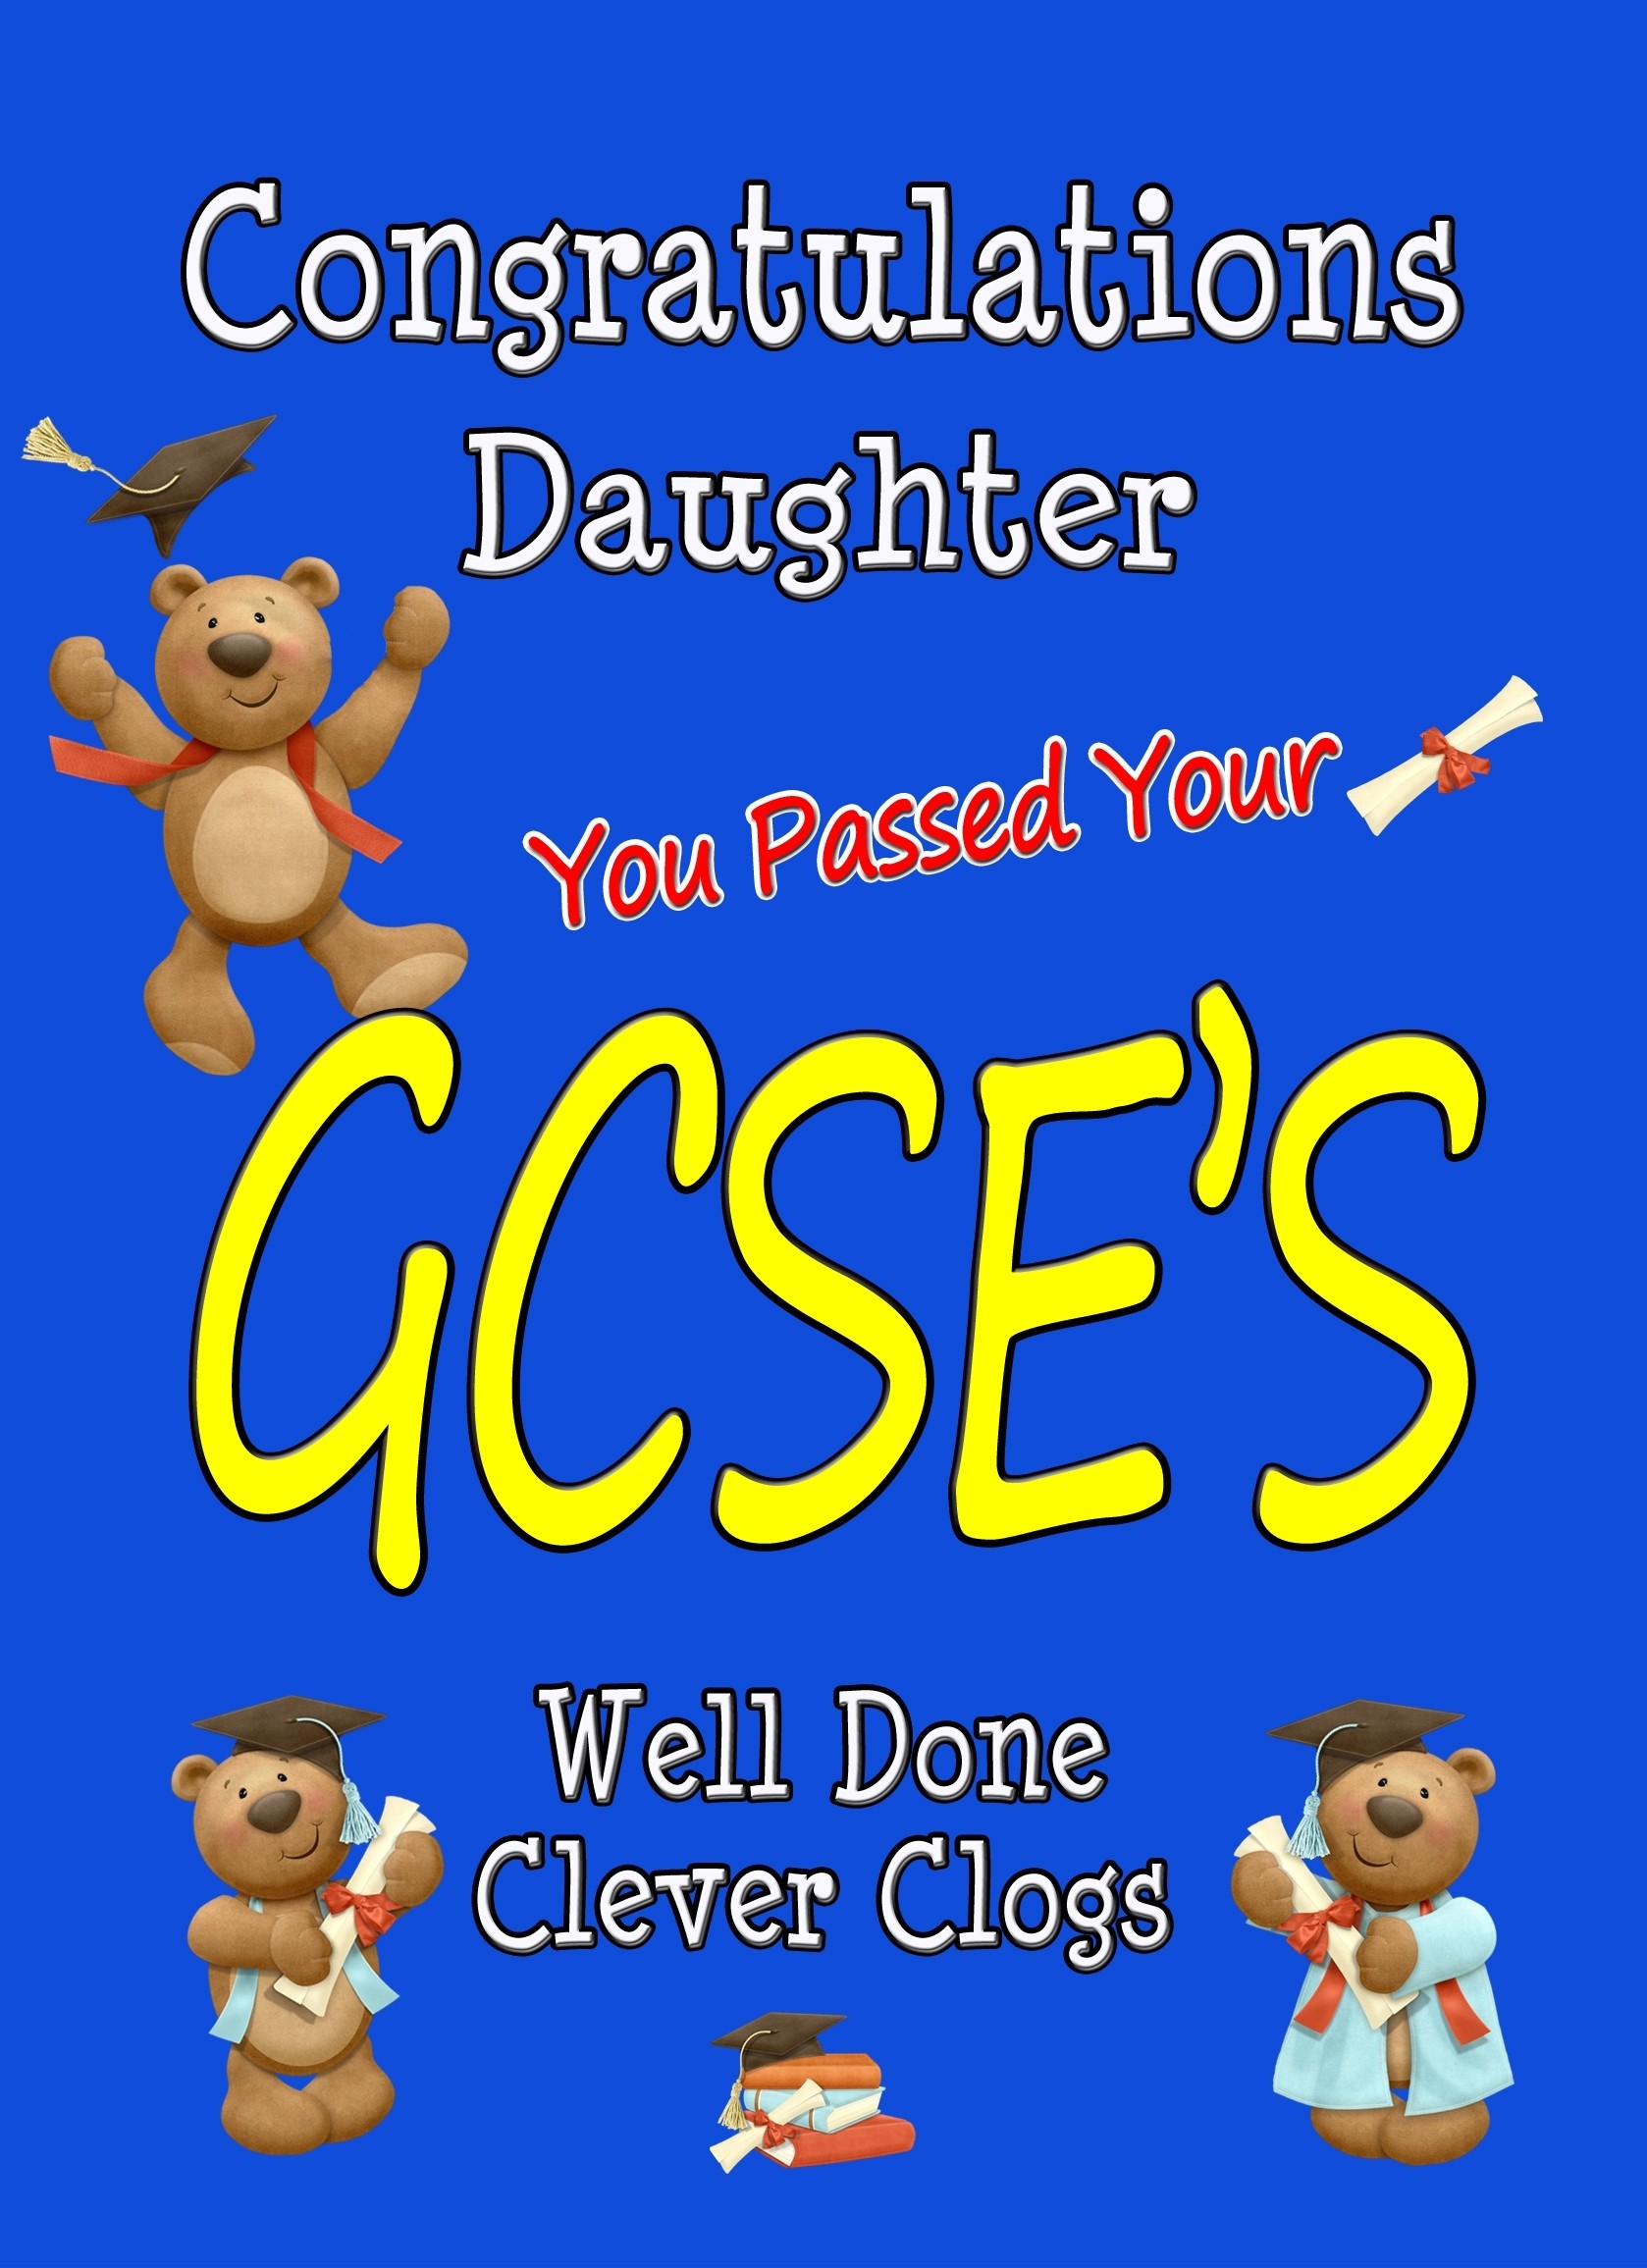 Congratulations GCSE Passing Exams Card For Daughter (Design 3)